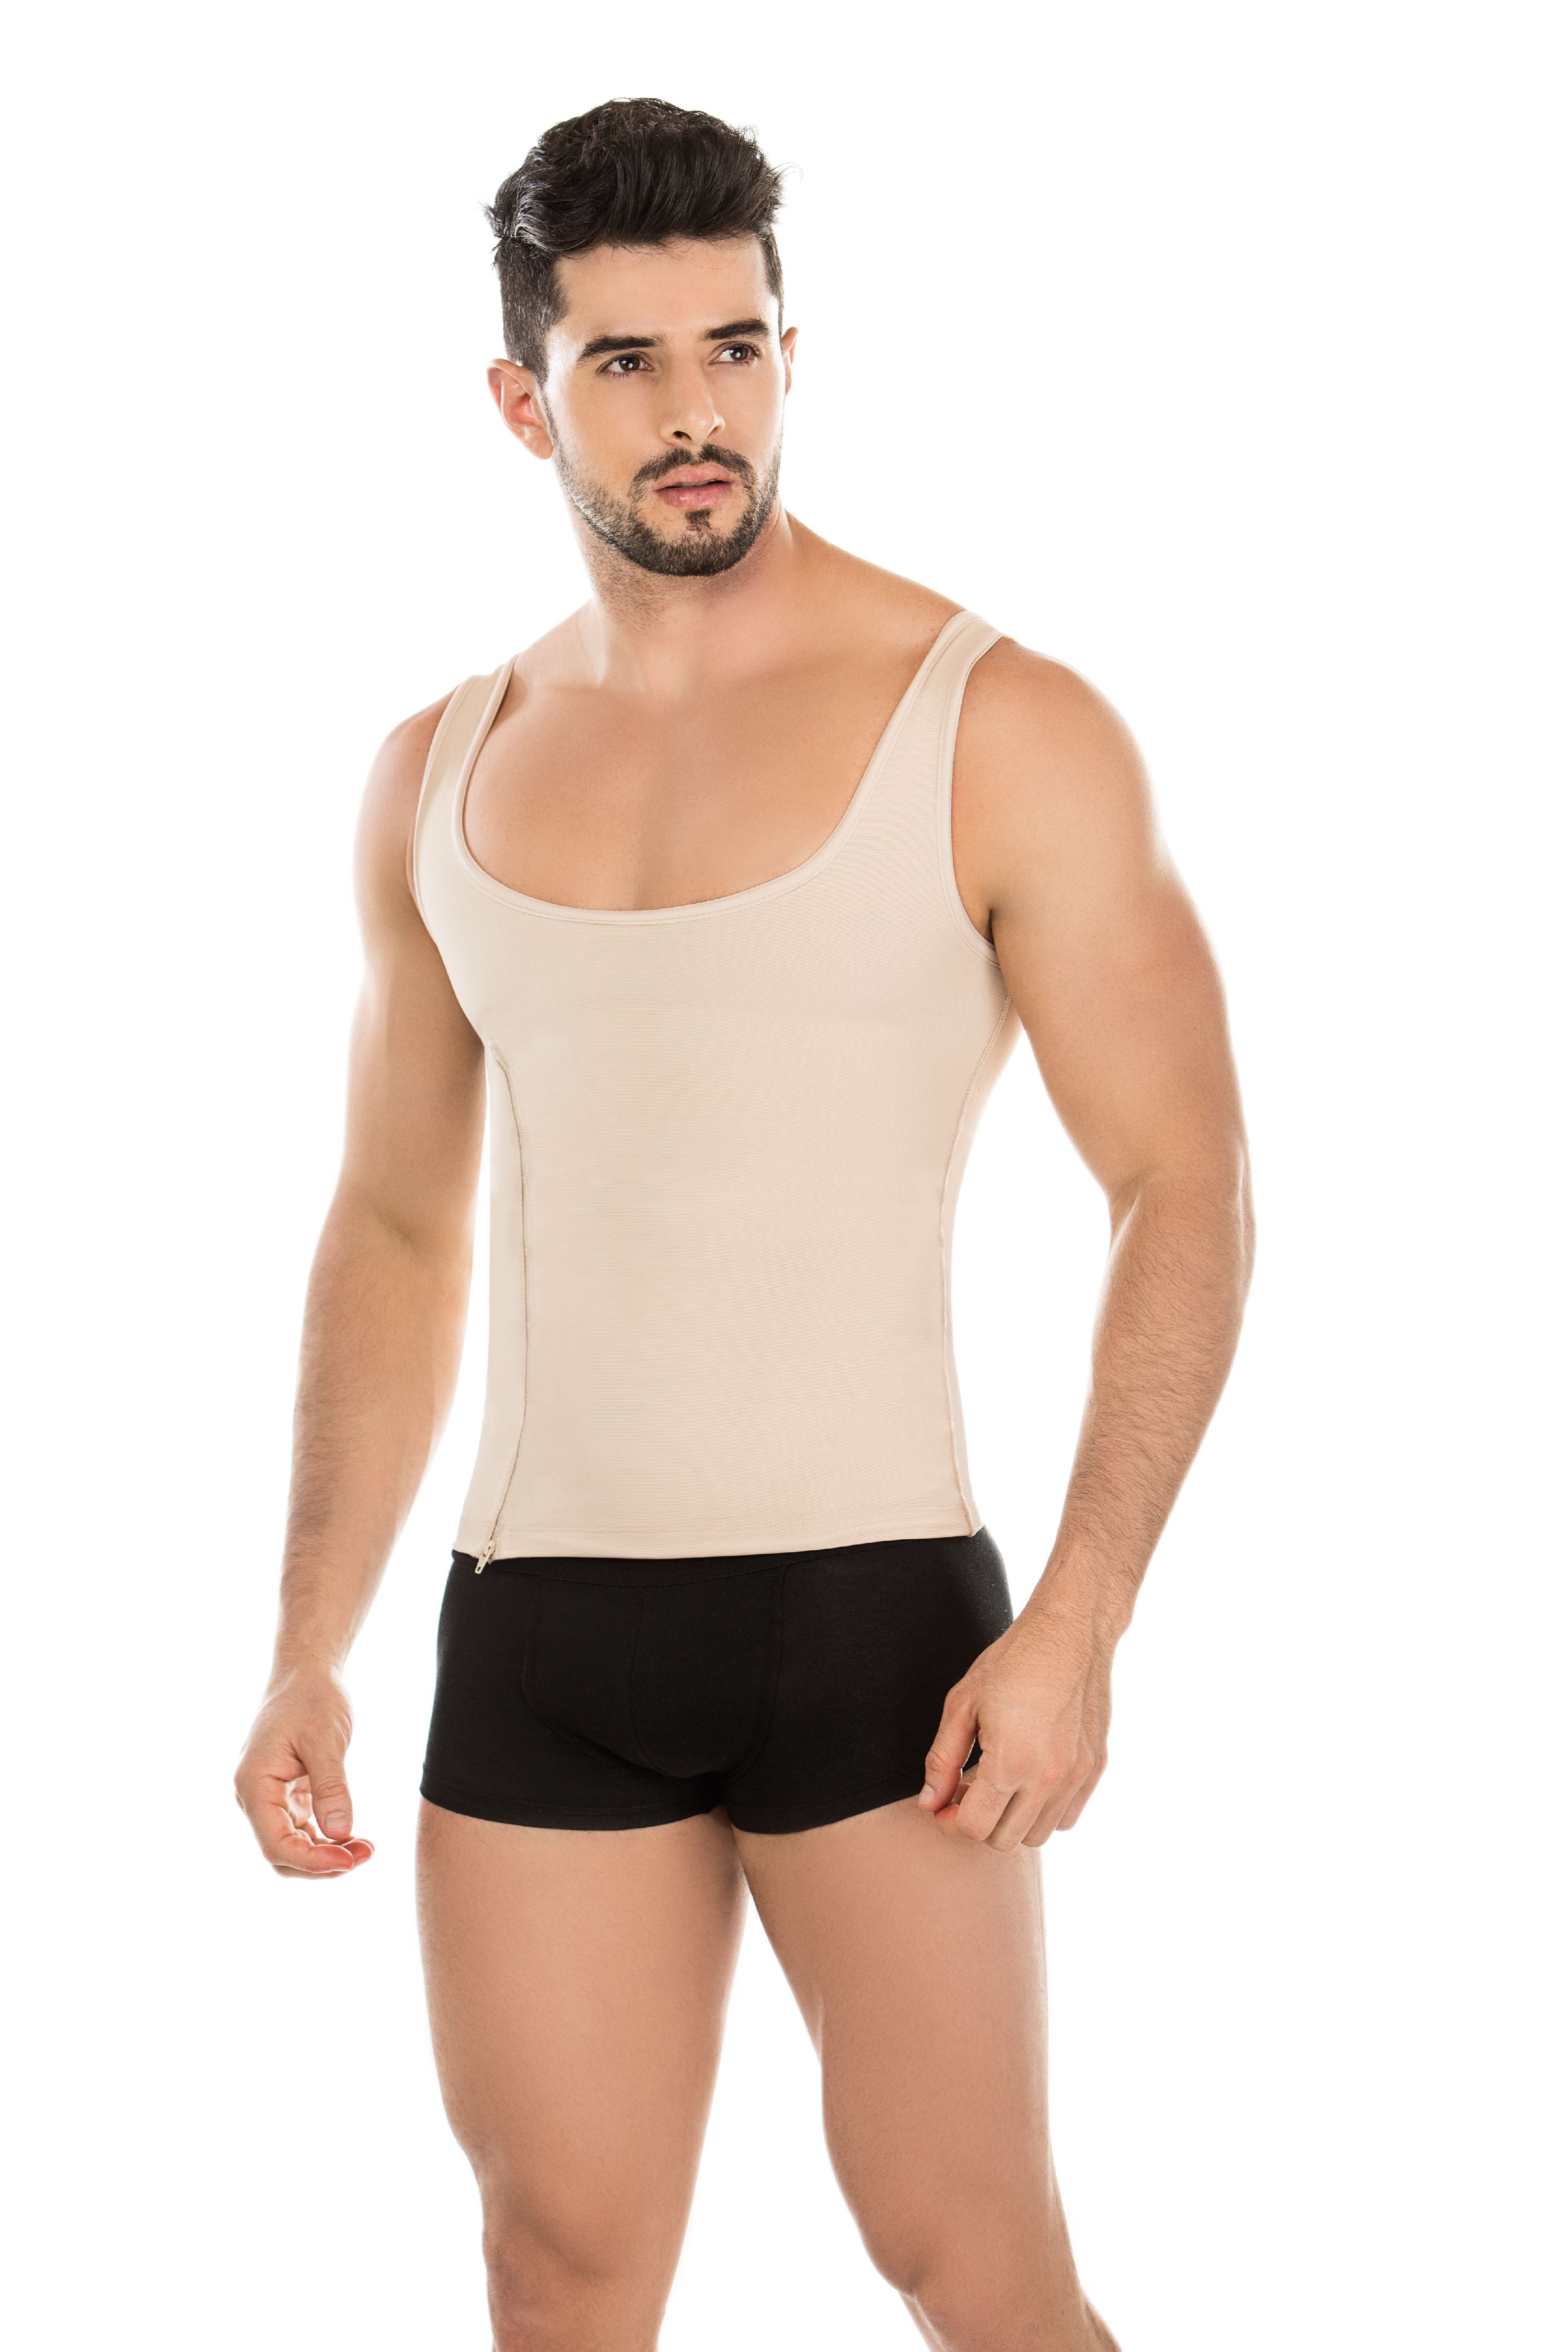 Fajas Colombianas Men's tank top zipper low back disc posture